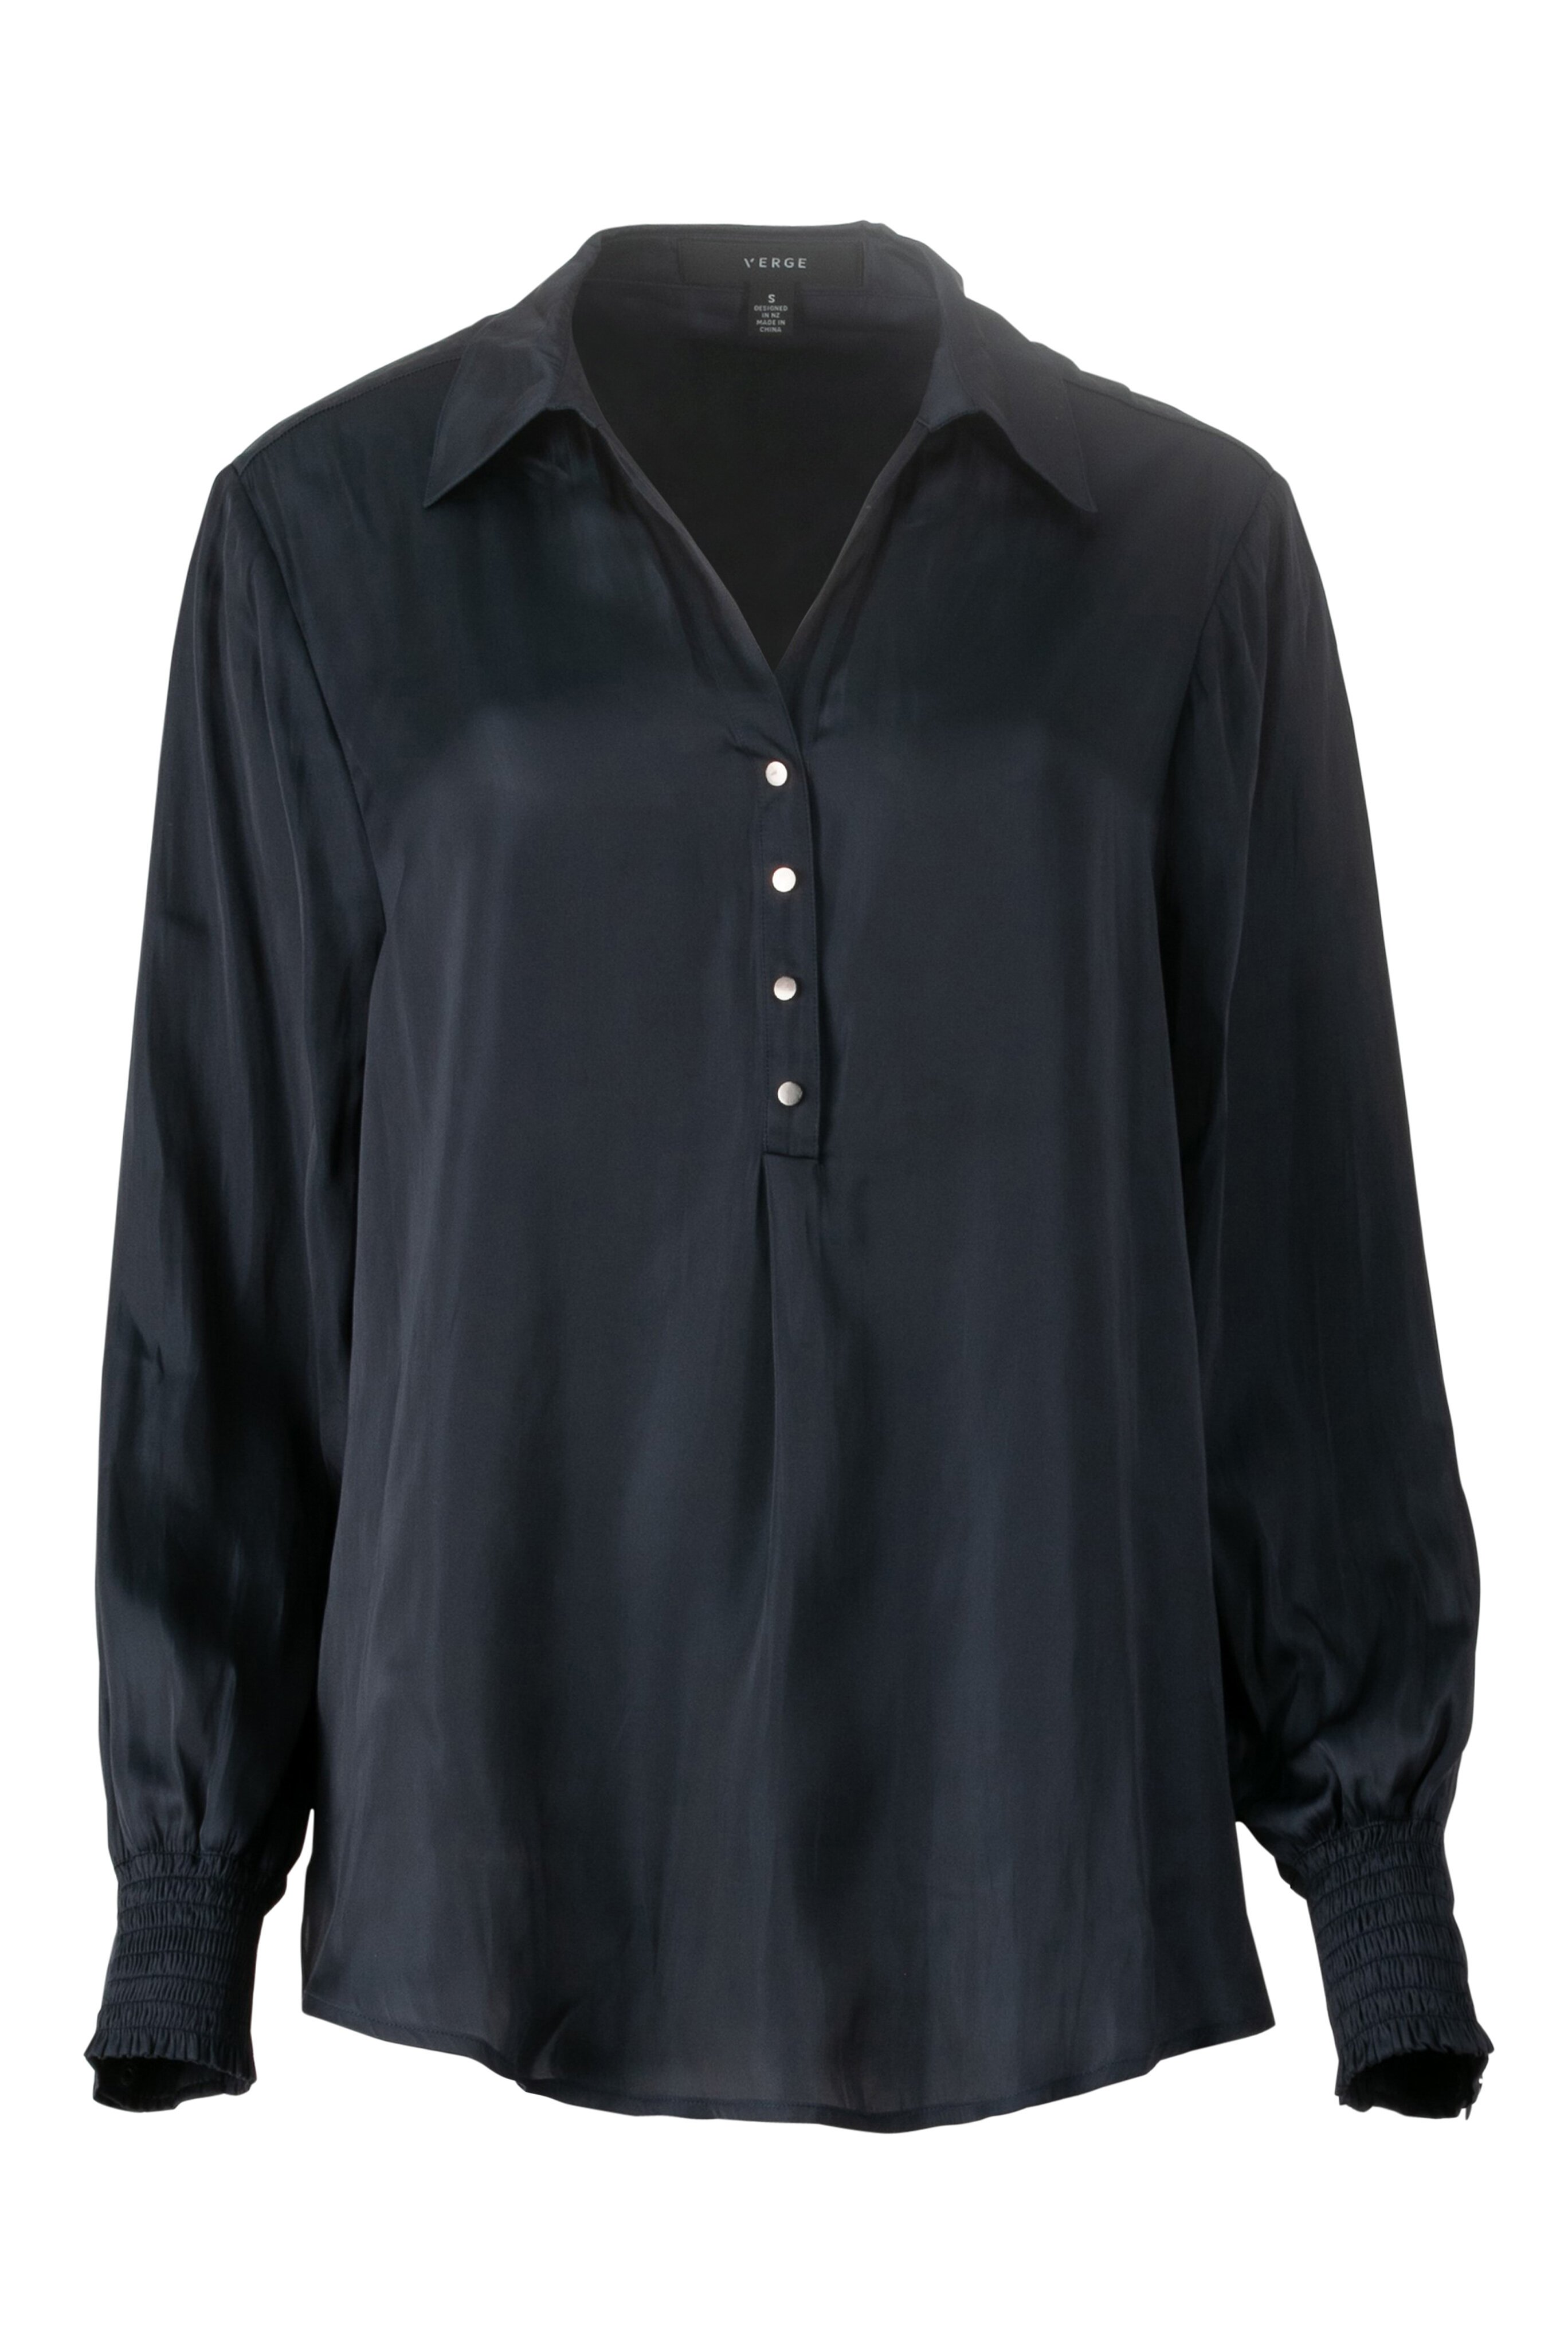 Verge Elegance Shirt - Brand-Verge : Diahann Boutique - Verge W20